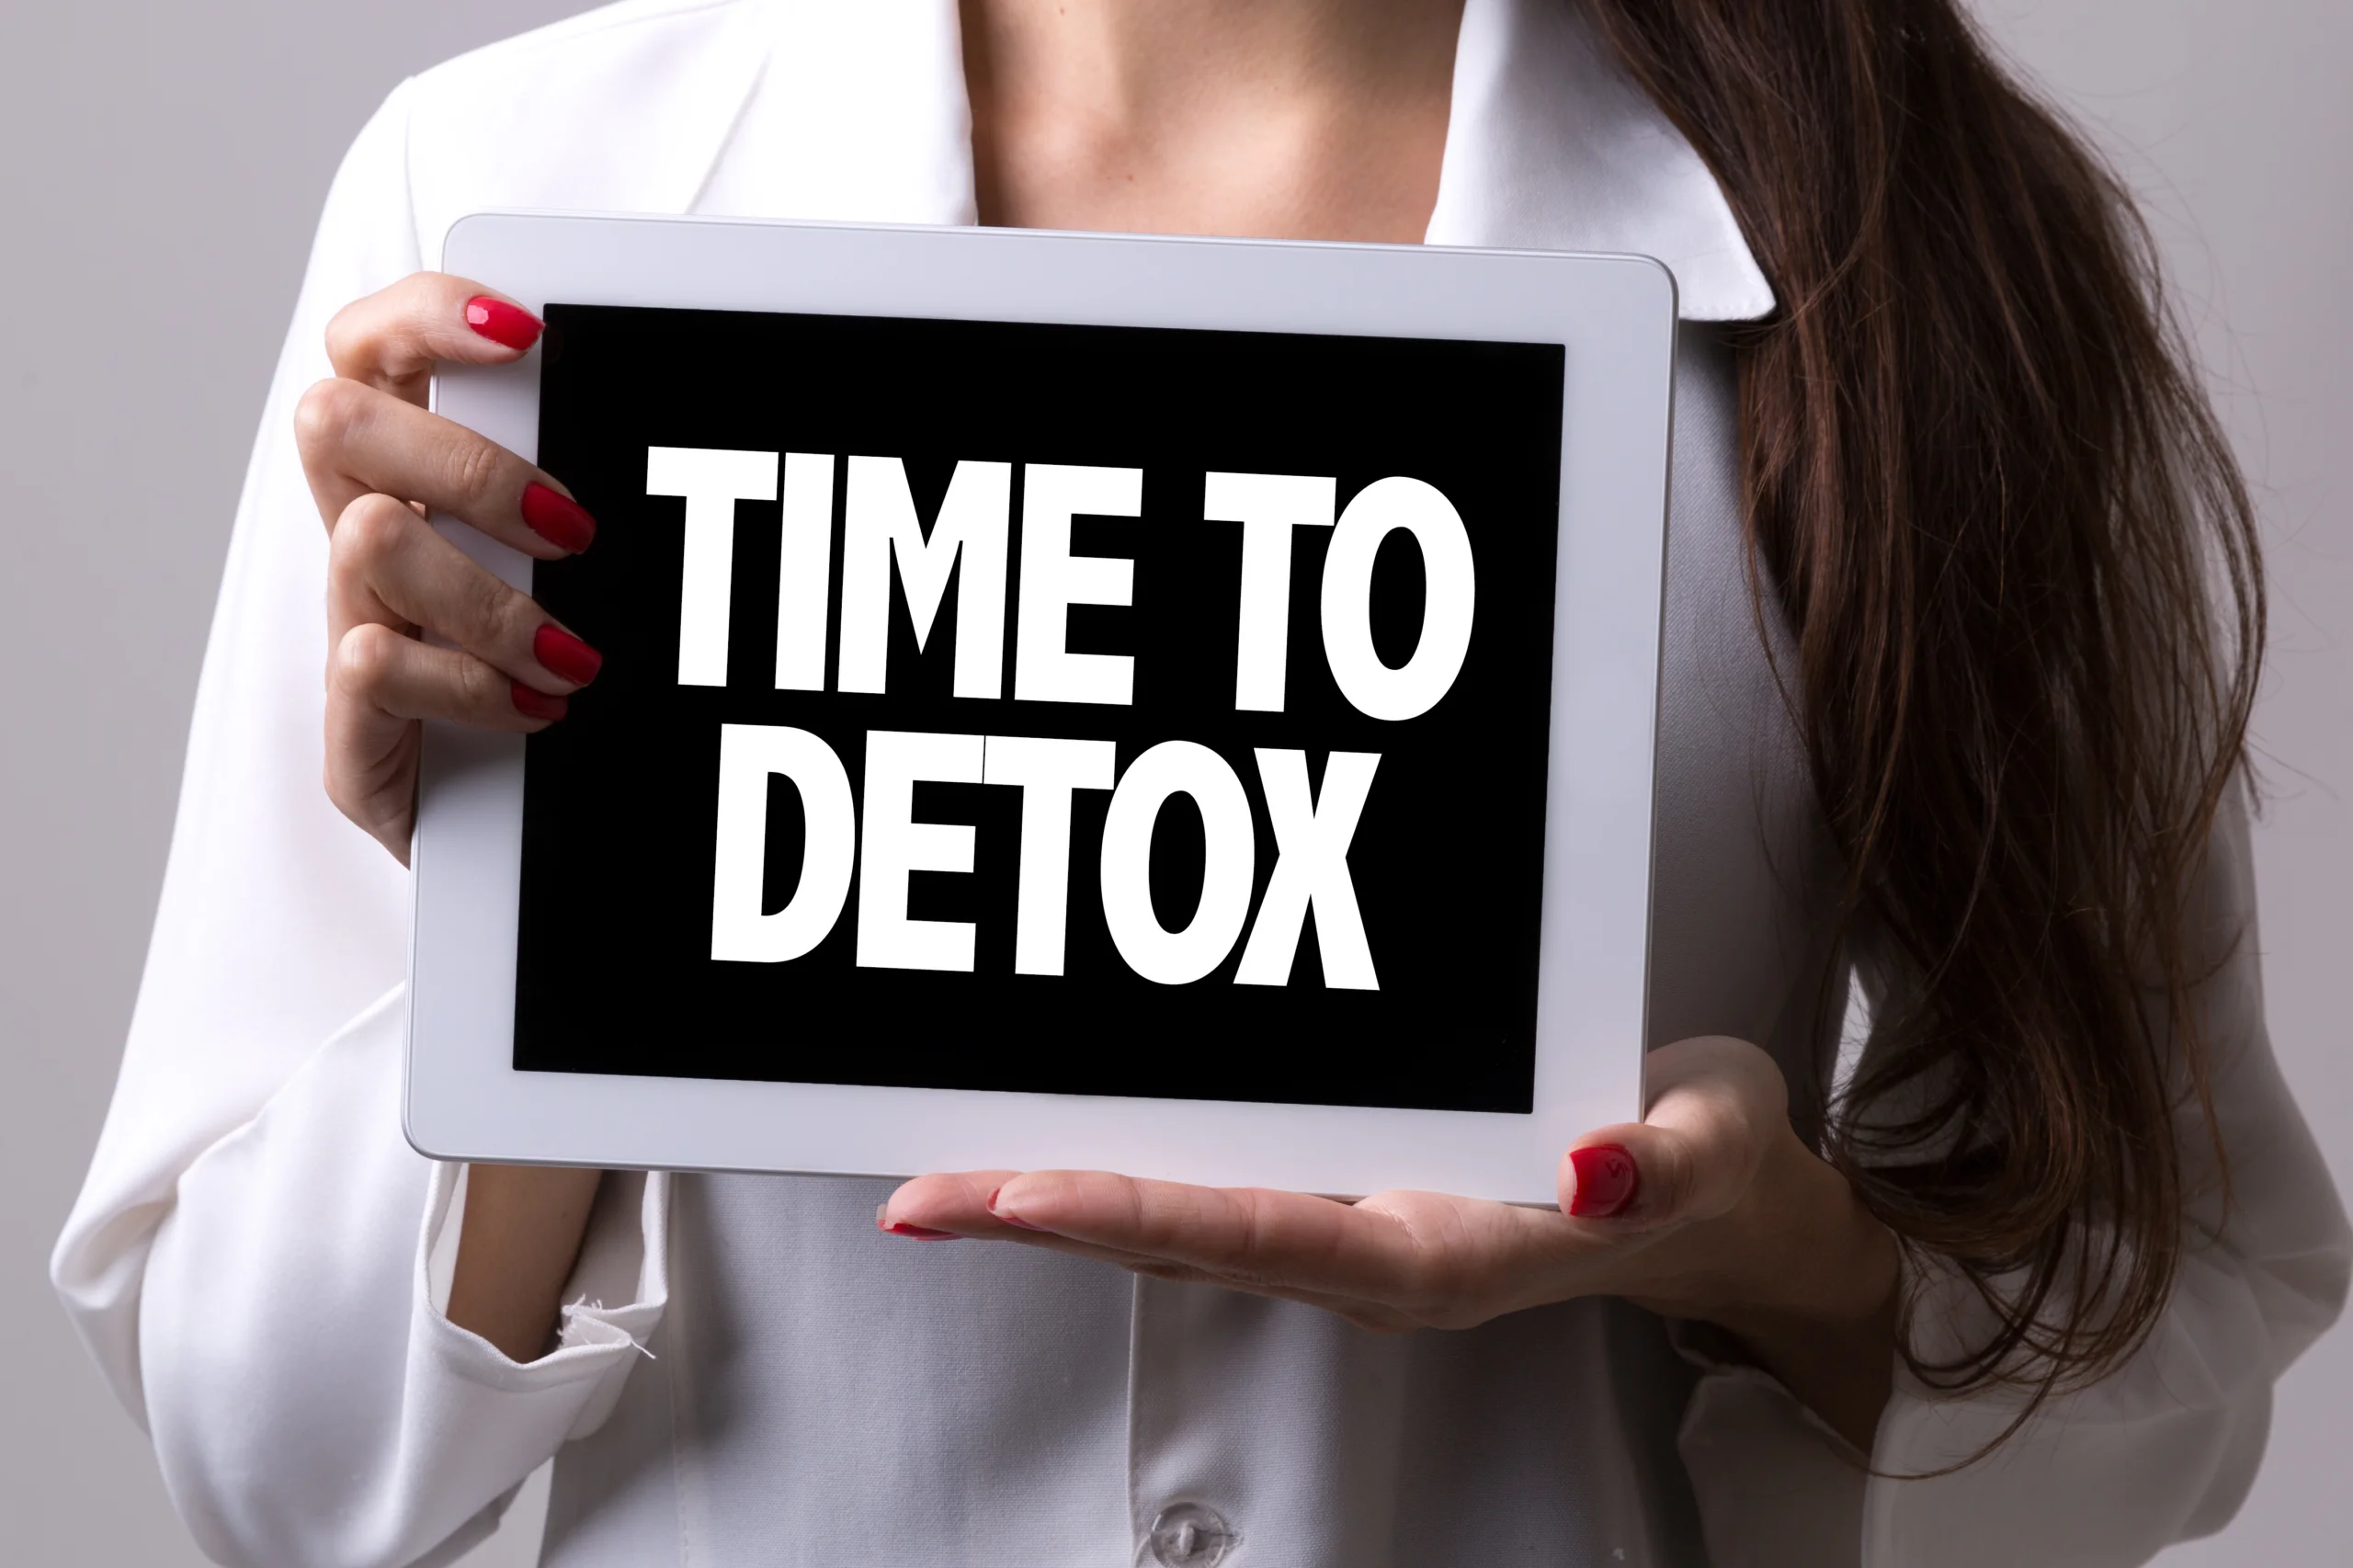 Why Detox for Diabetes?